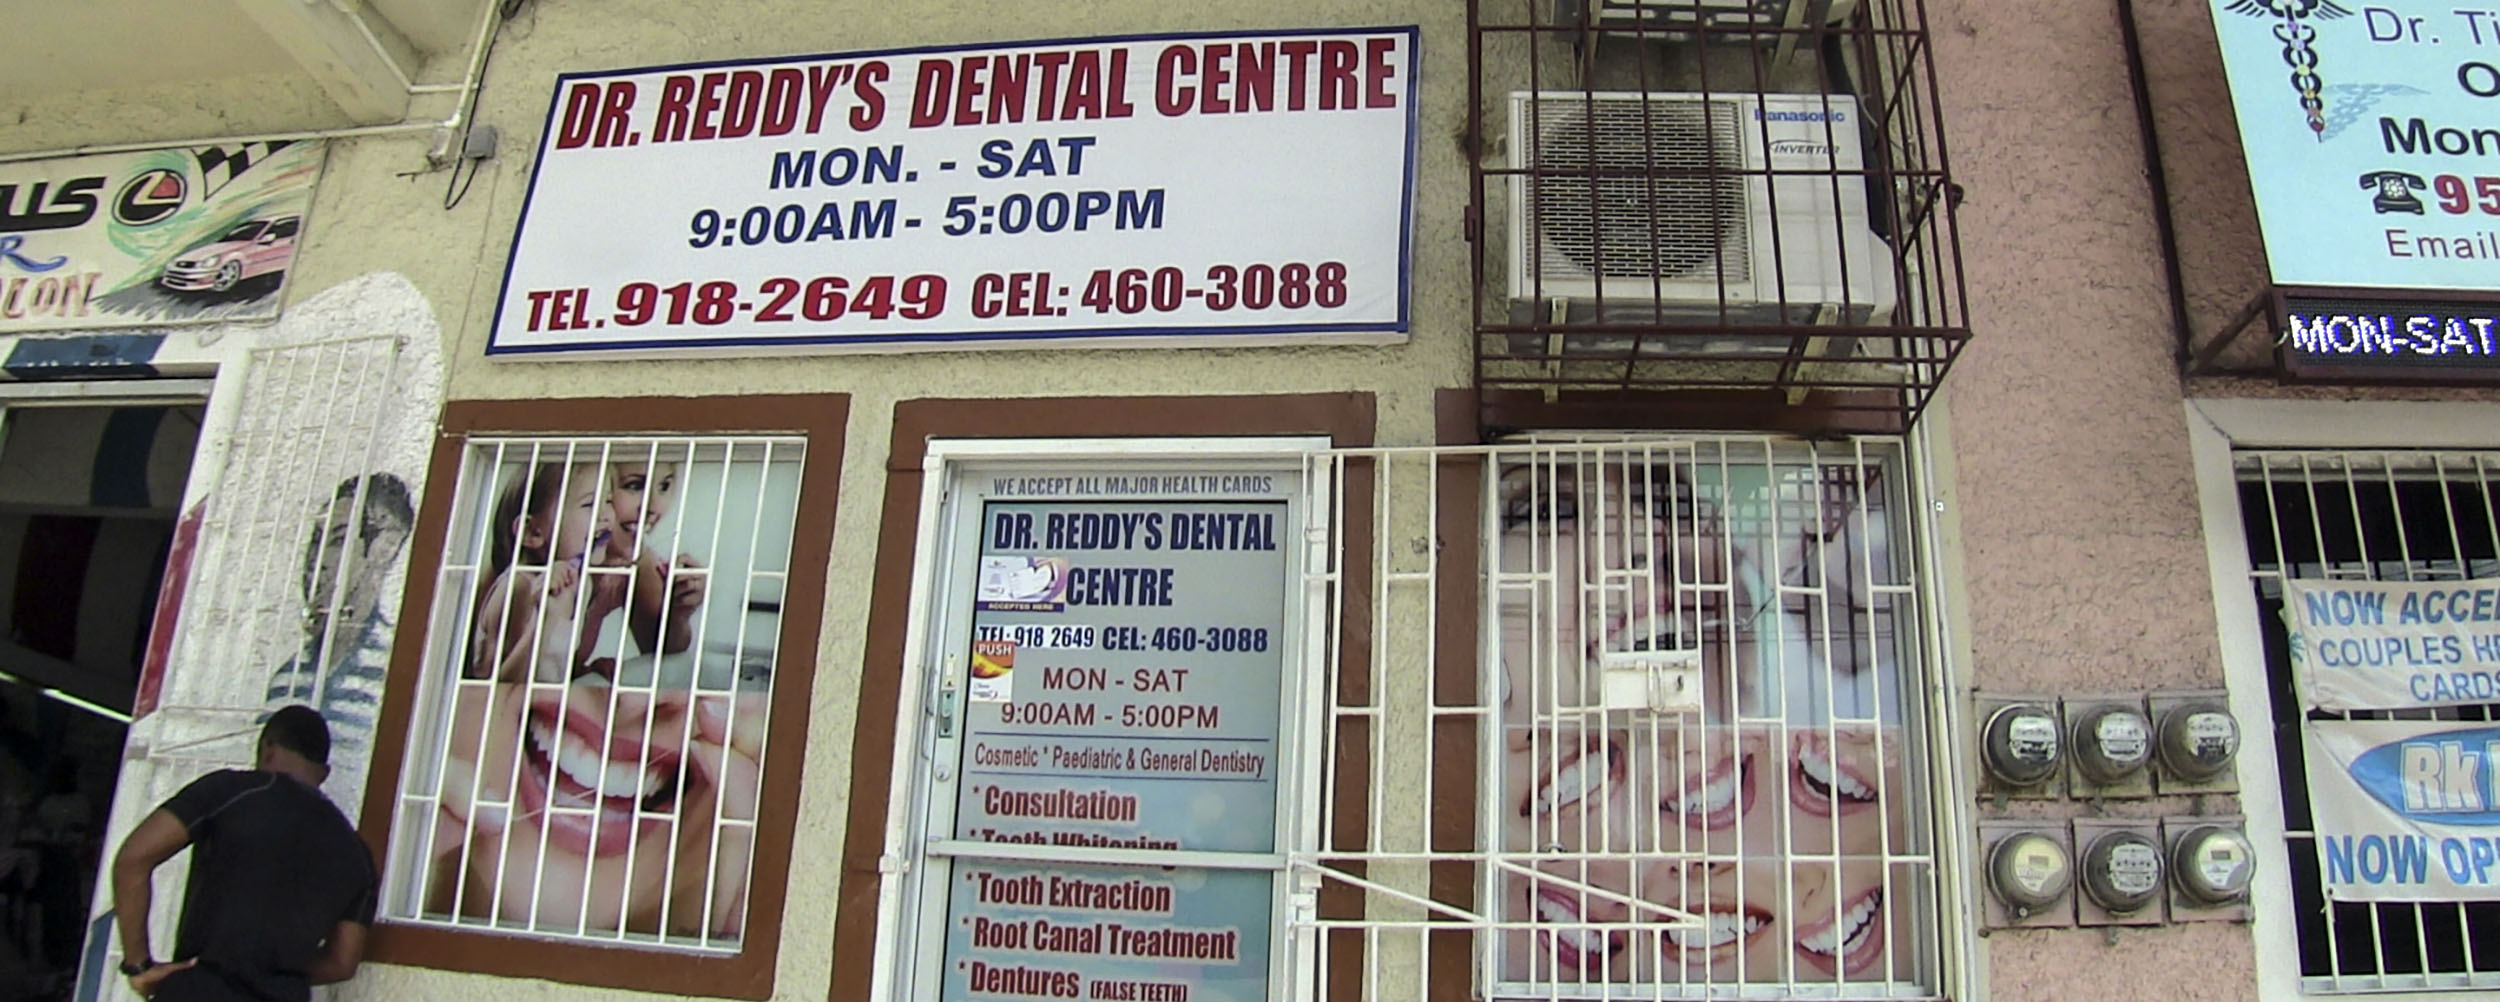 Dr. Reddy's Dental Office - White Swan Plaza - Nonpareil Road, Negril Jamaica